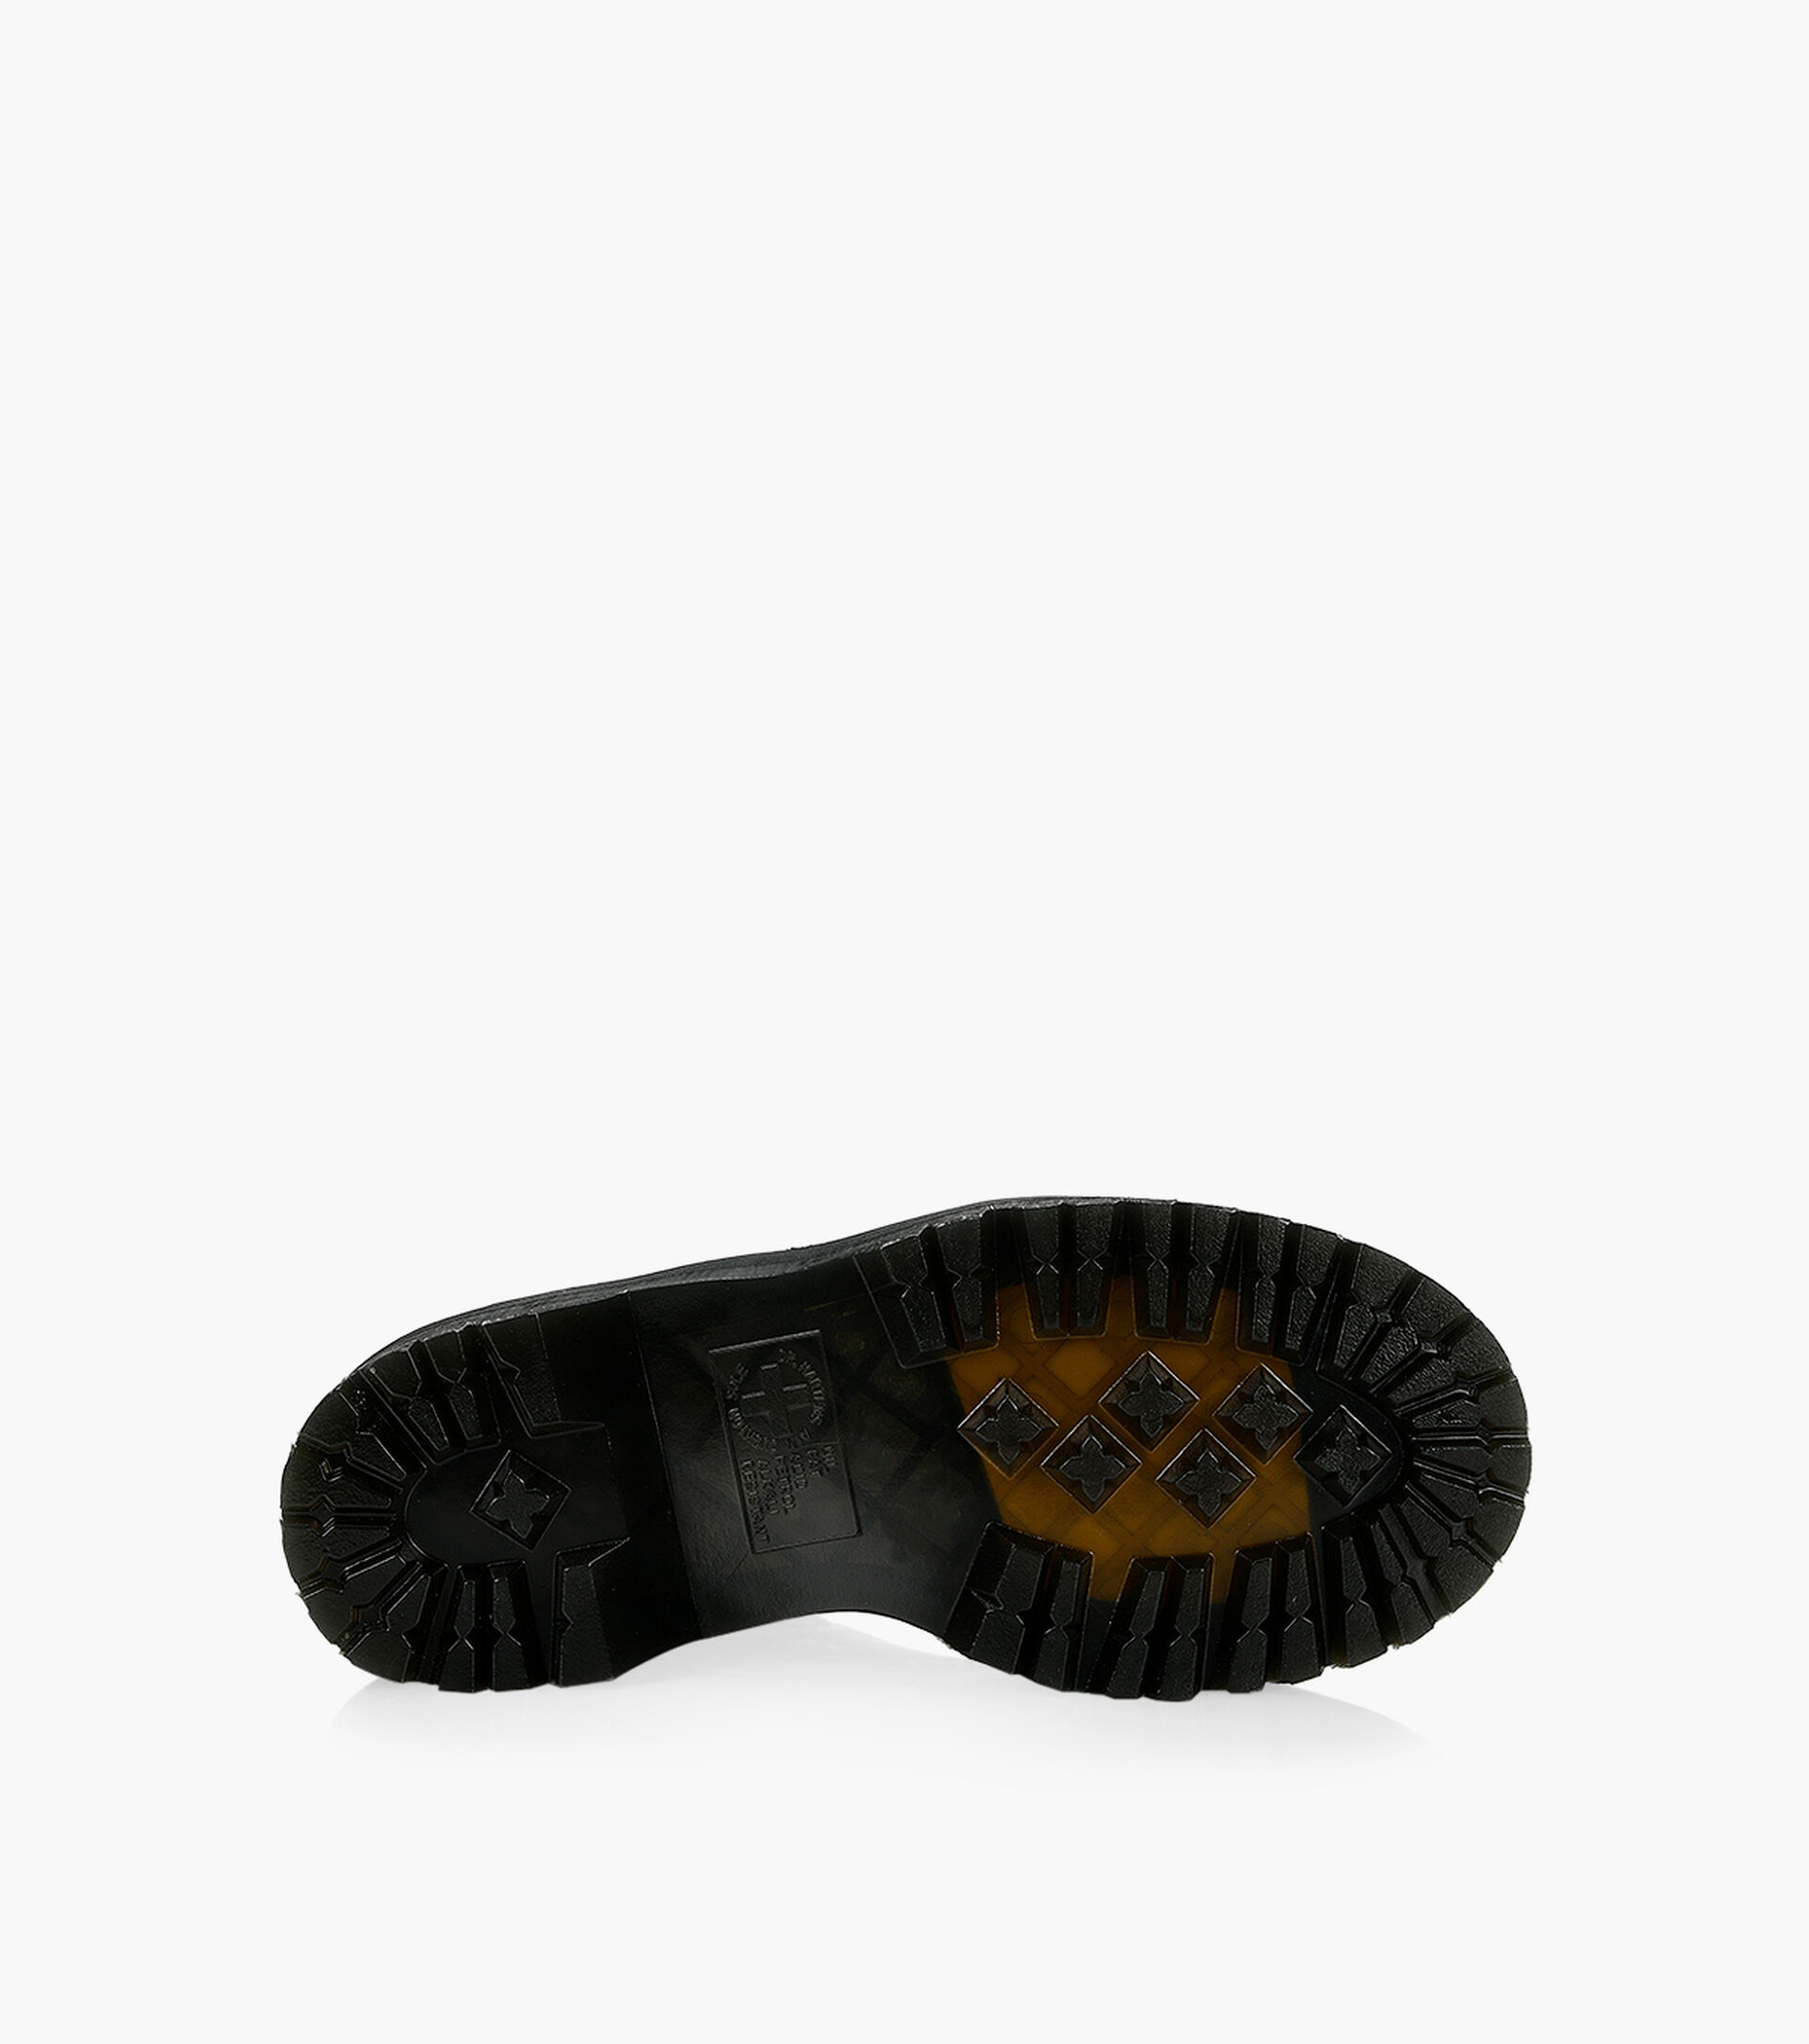 DR. MARTENS 8053 QUAD - Black Leather | Browns Shoes